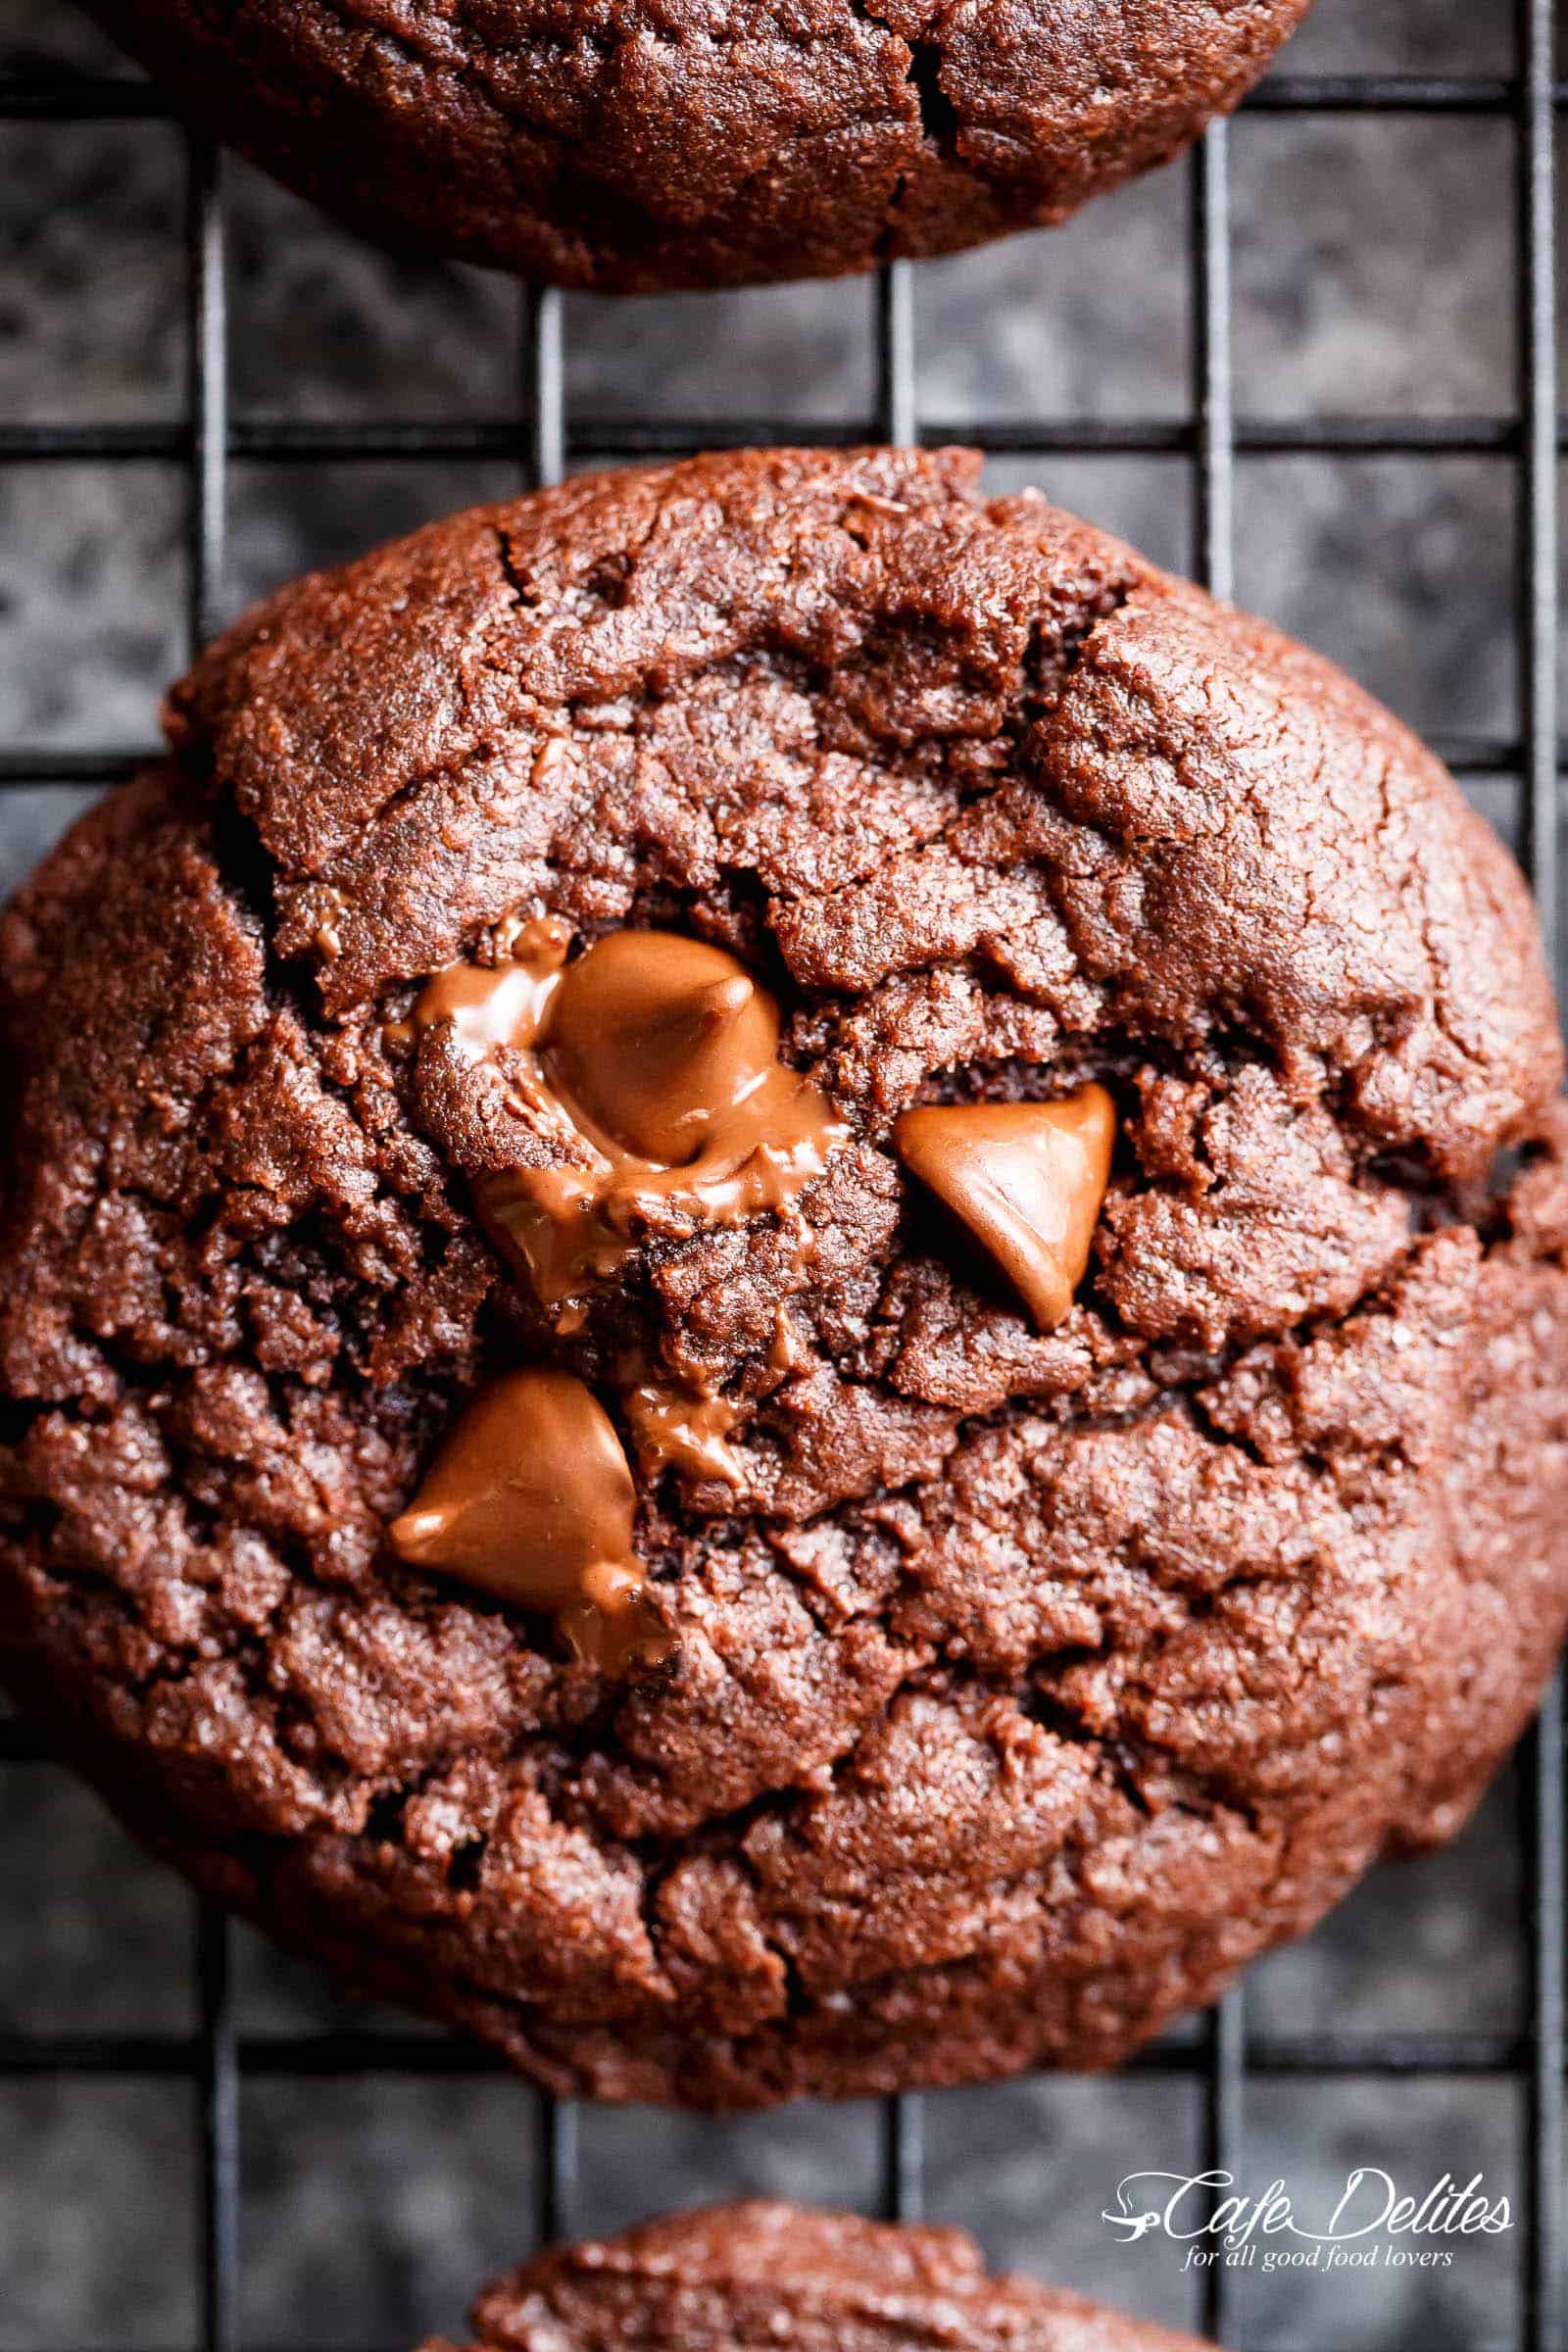 https://cafedelites.com/wp-content/uploads/2017/09/Fudgy-Chocolate-Cookies-IMAGE-108.jpg